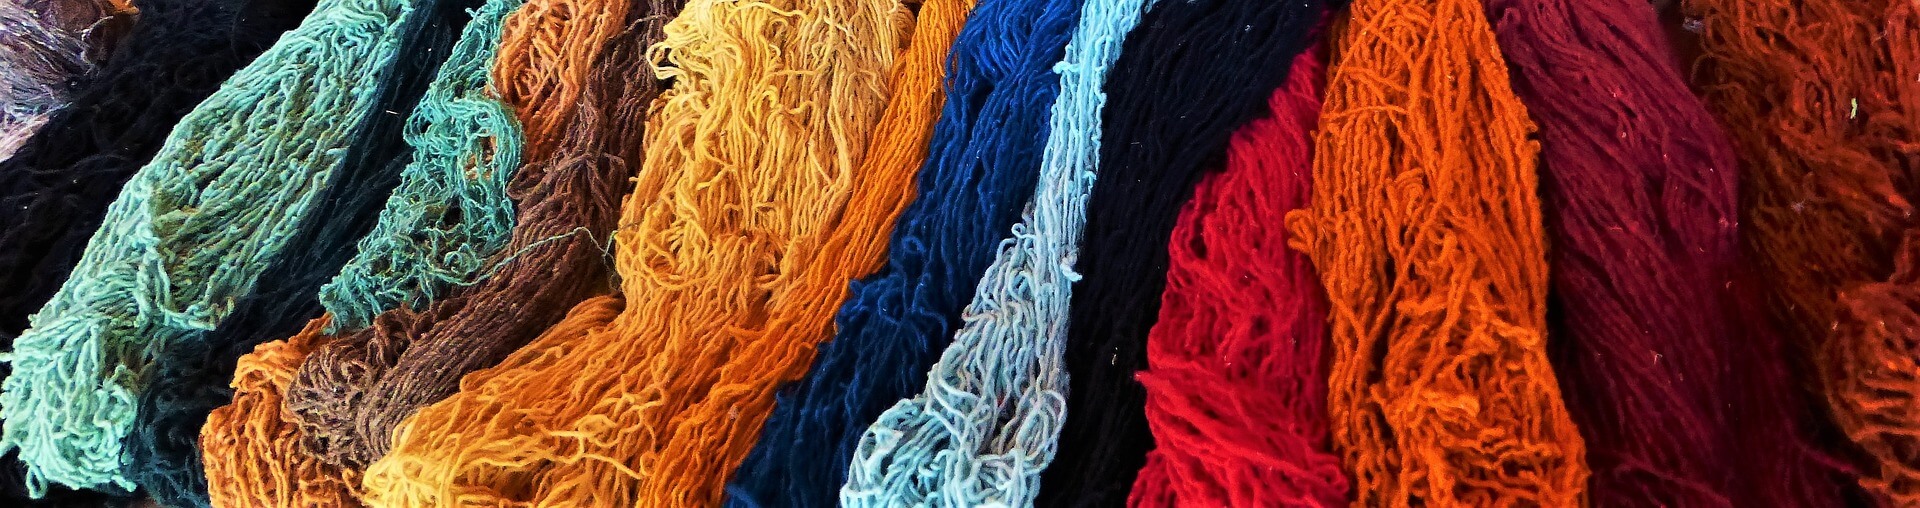 couleurs-laine-d-alpaga.jpg